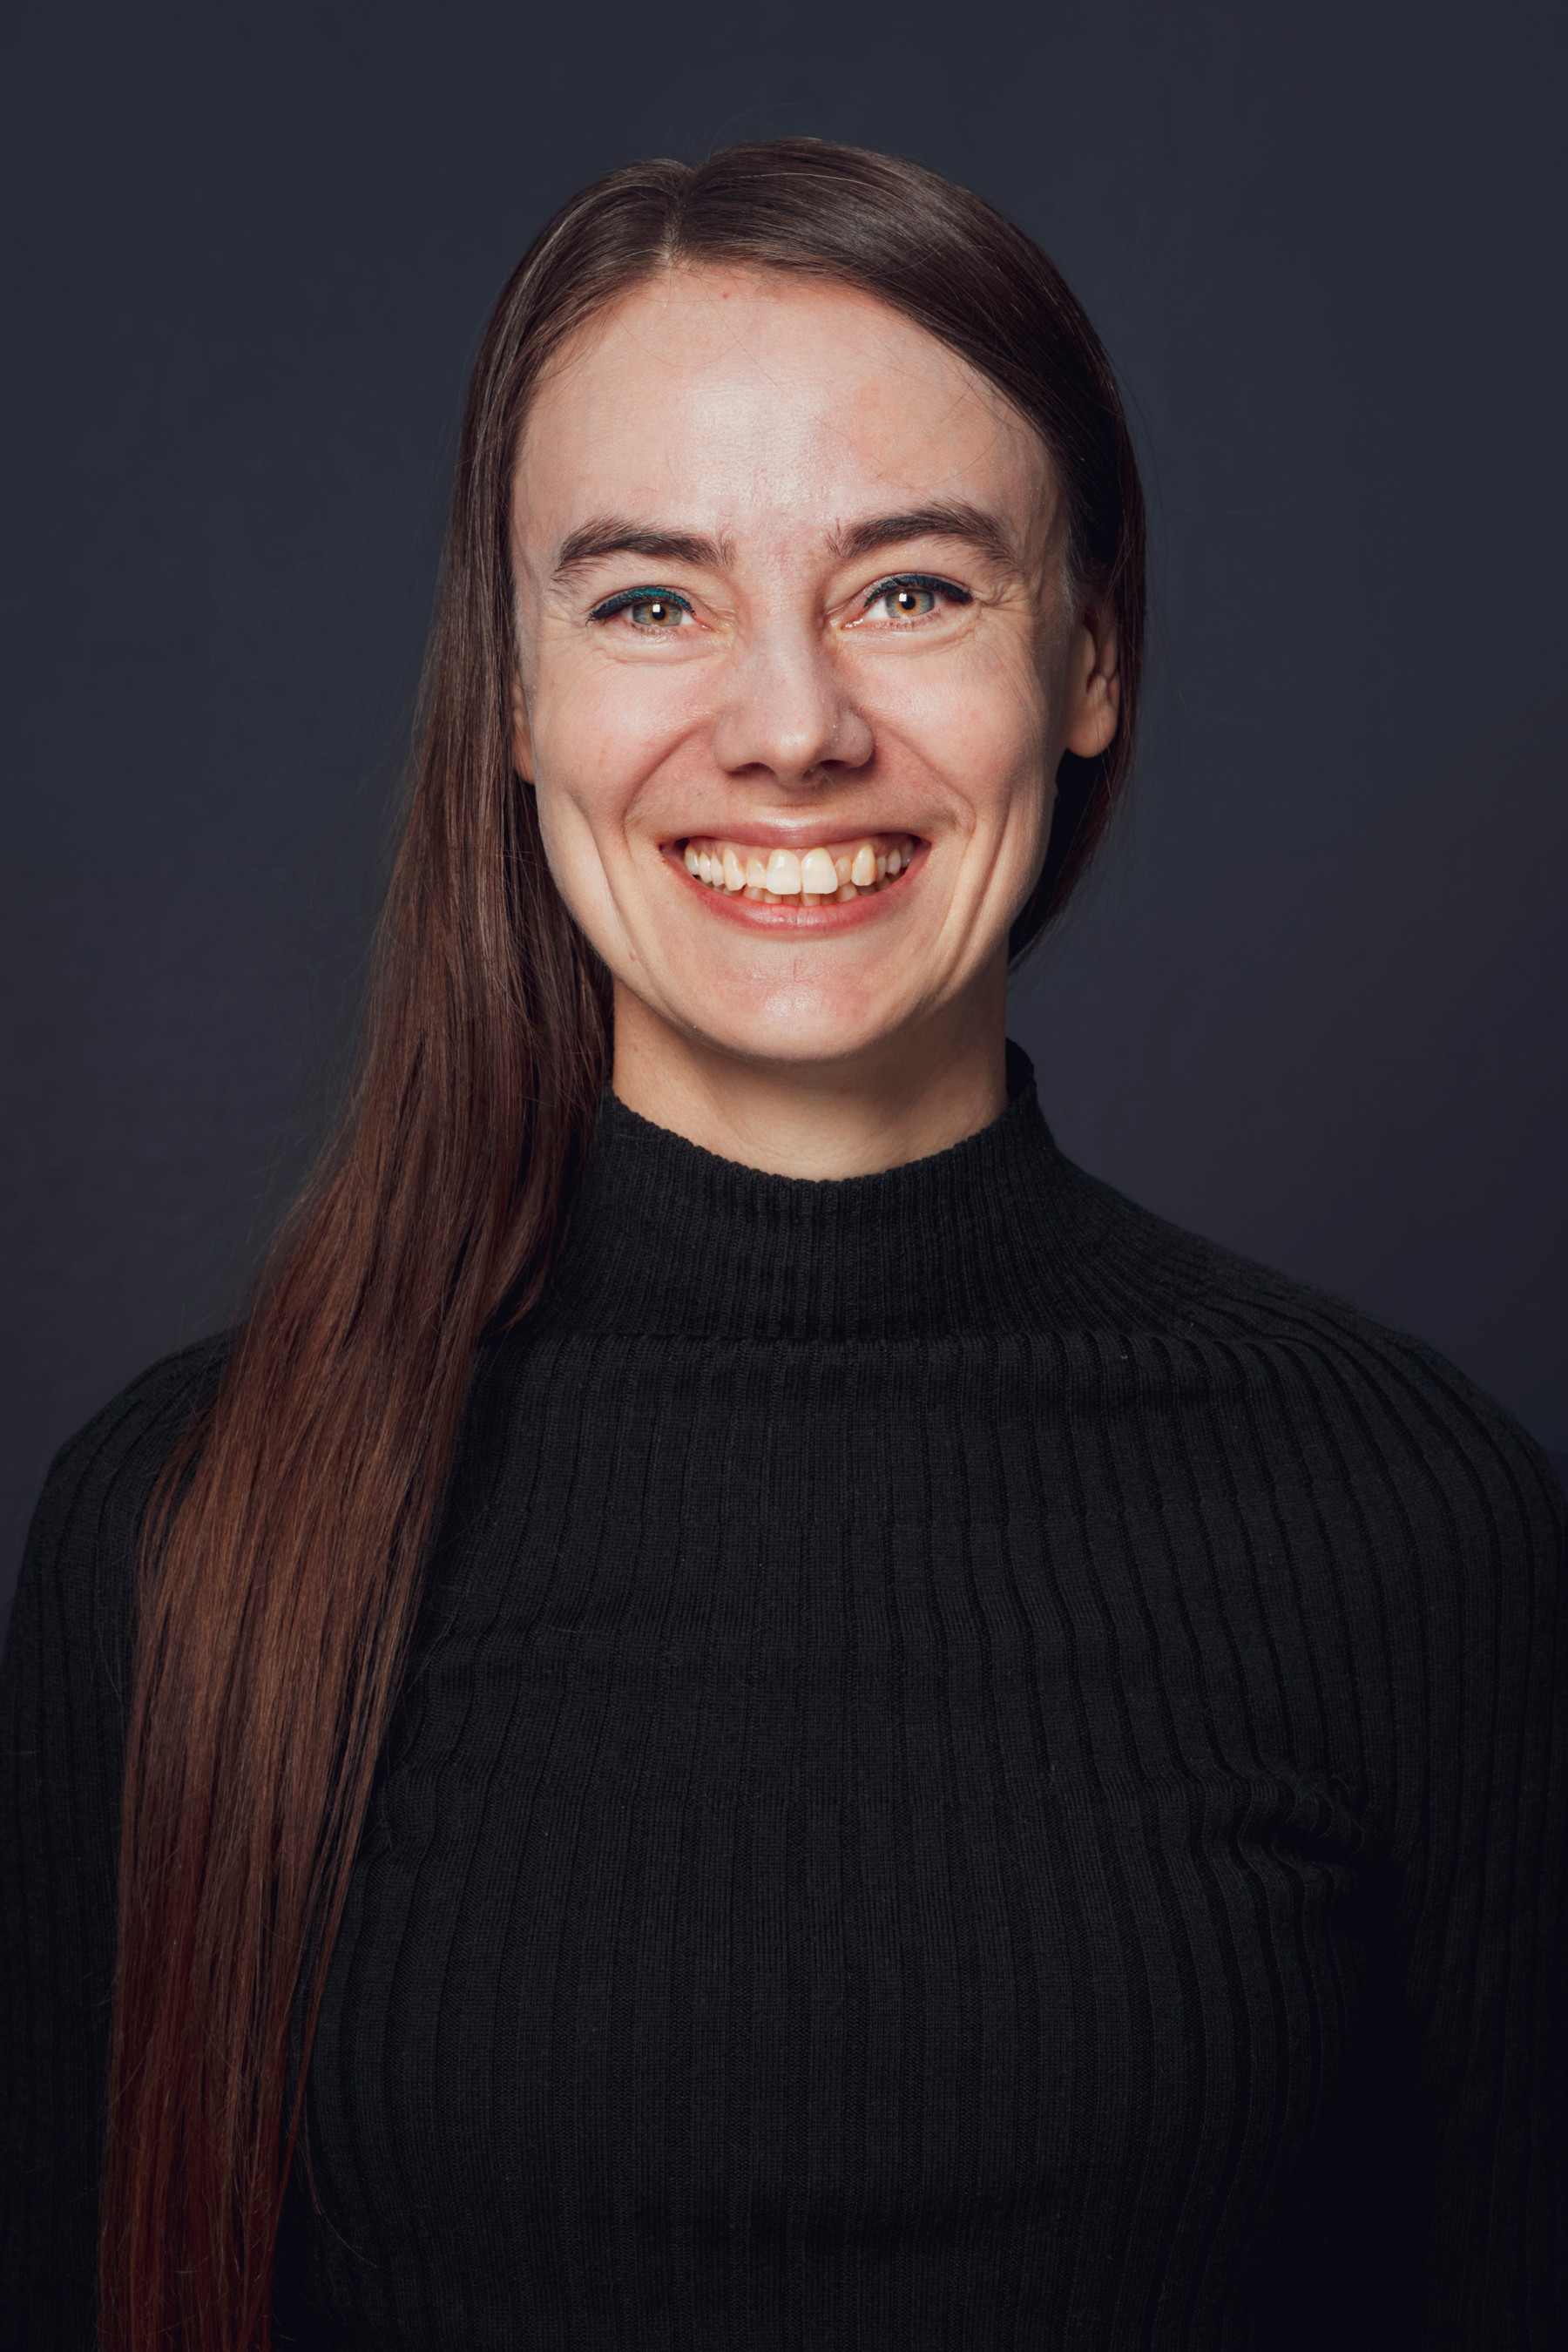 Photo of Marieke smiling in a black top